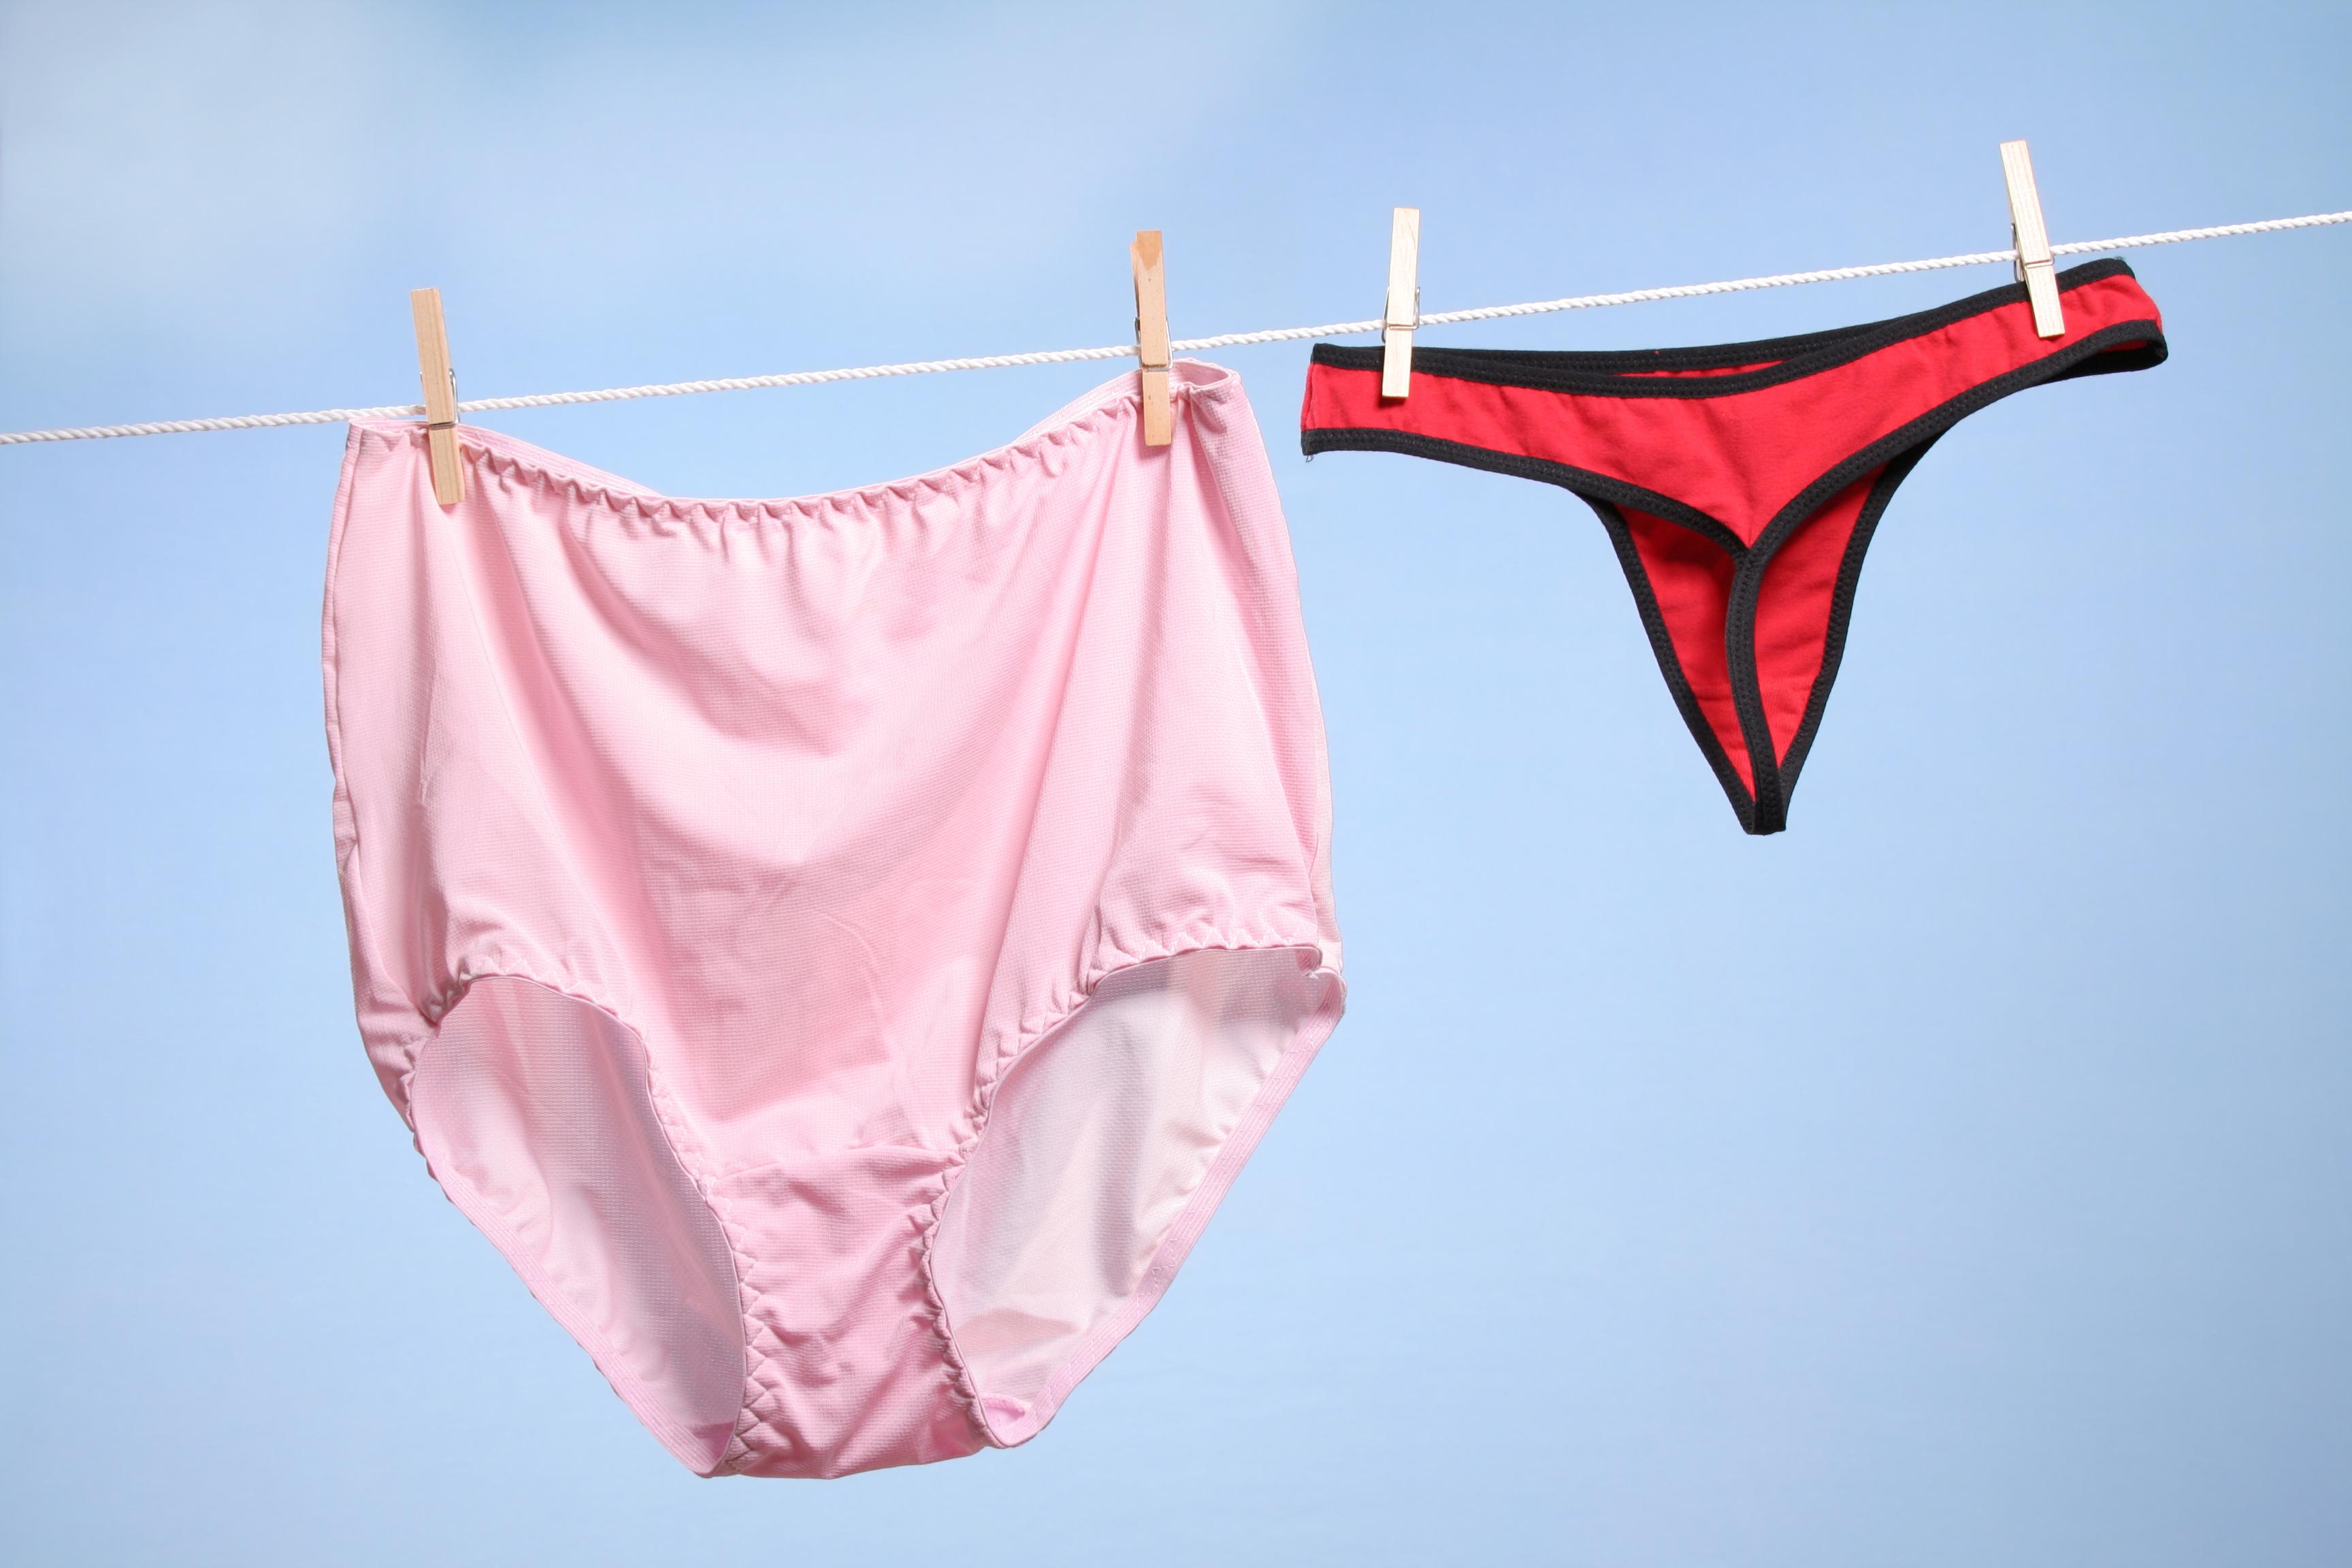 alison fuller add photo caught in womens underwear